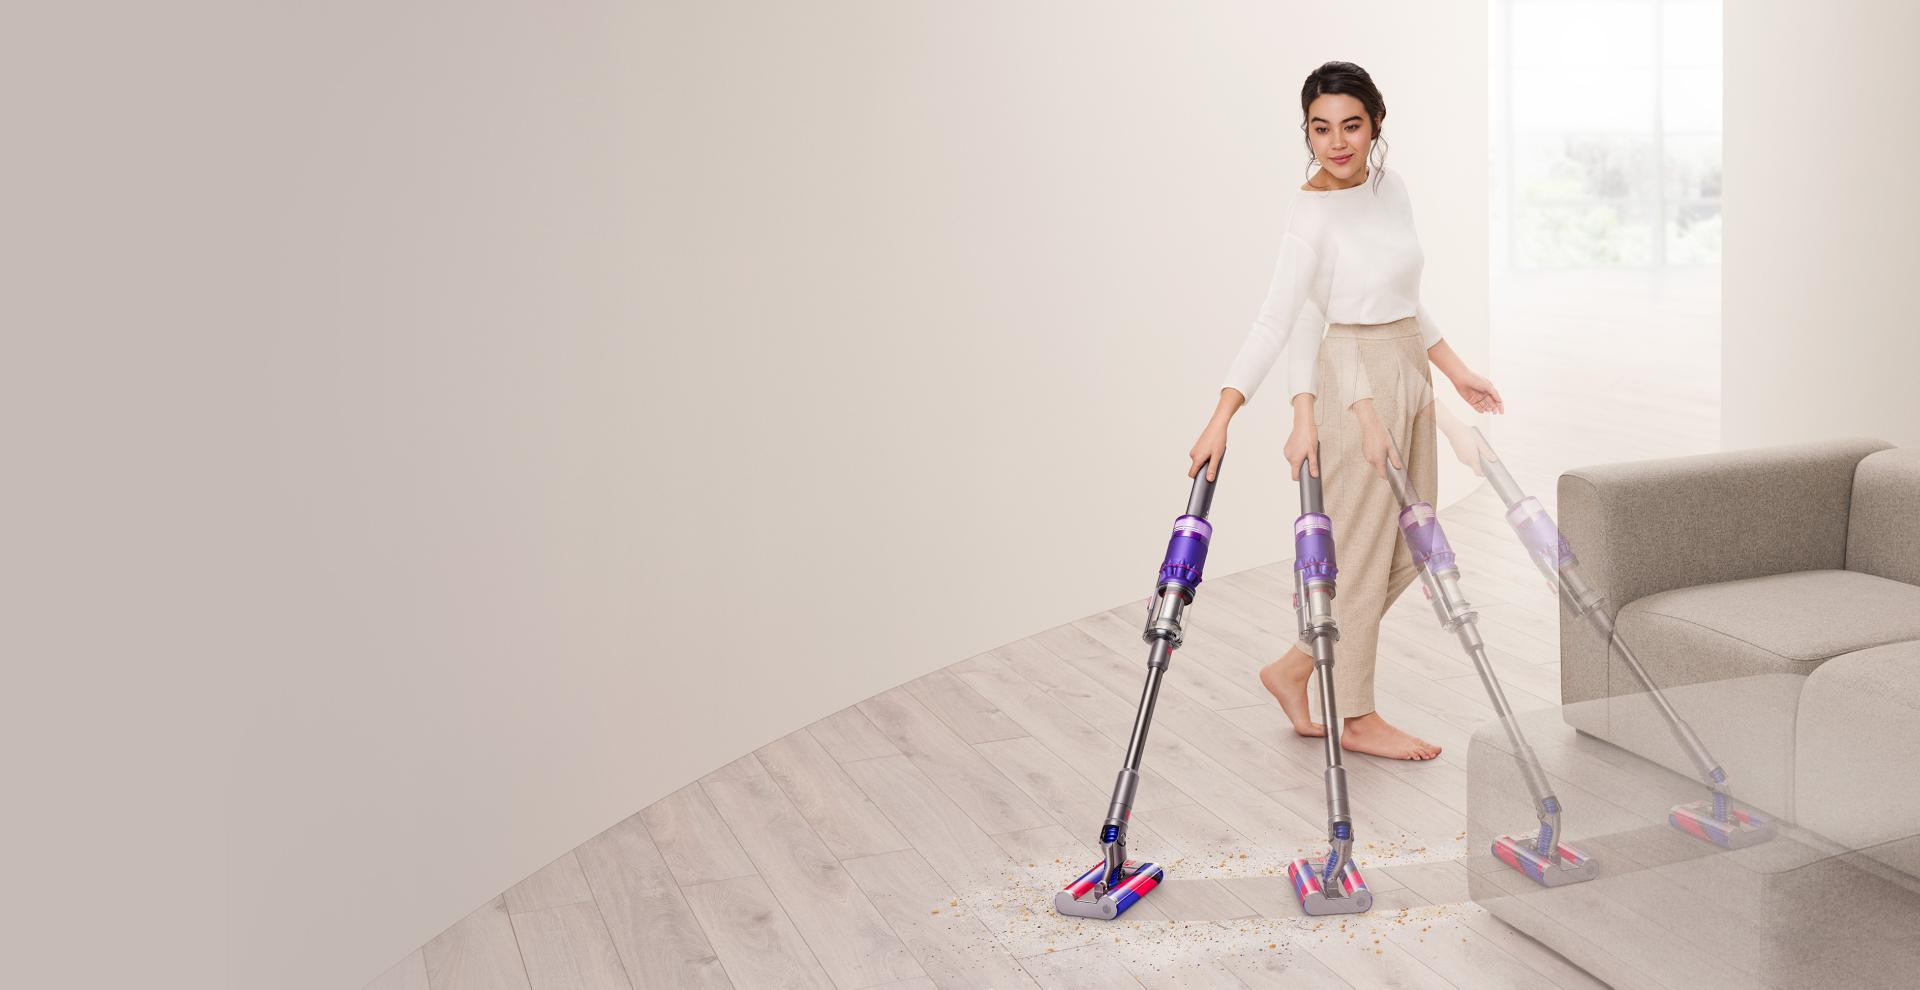 Woman vacuuming hard floor around sofa with the Dyson Omni-glide™ vacuum.